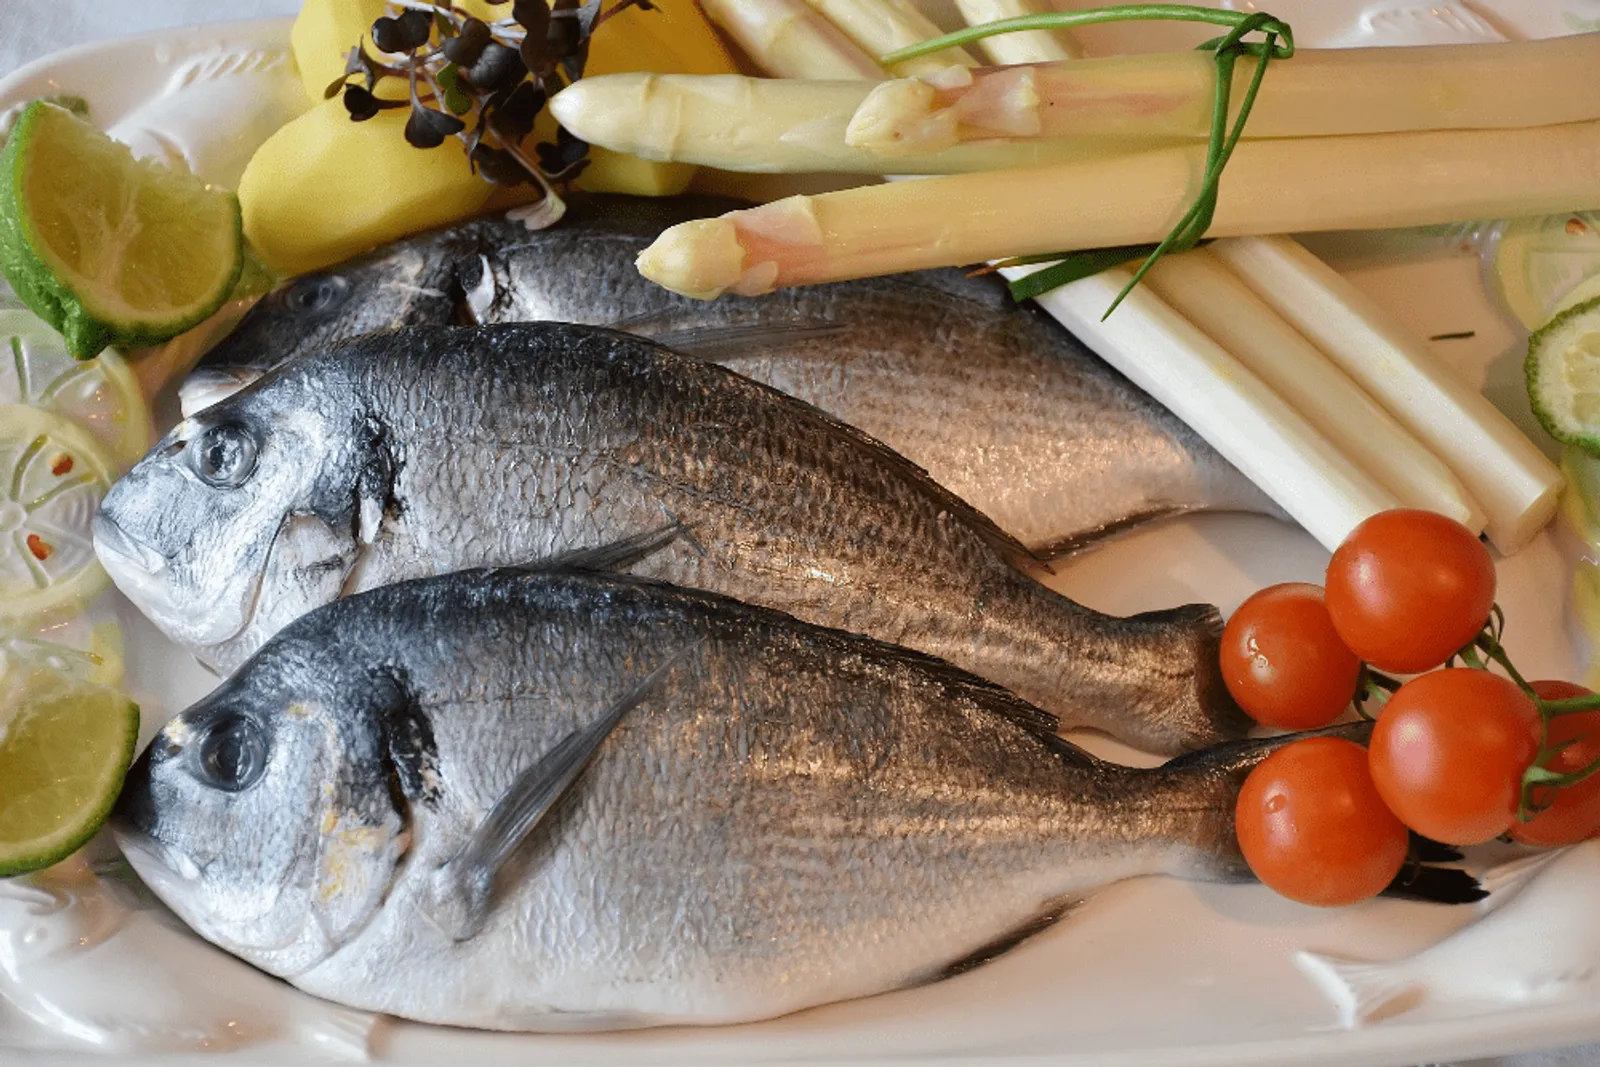 Harus Teliti, Inilah 5 Tips Memilih Ikan Segar di Pasar